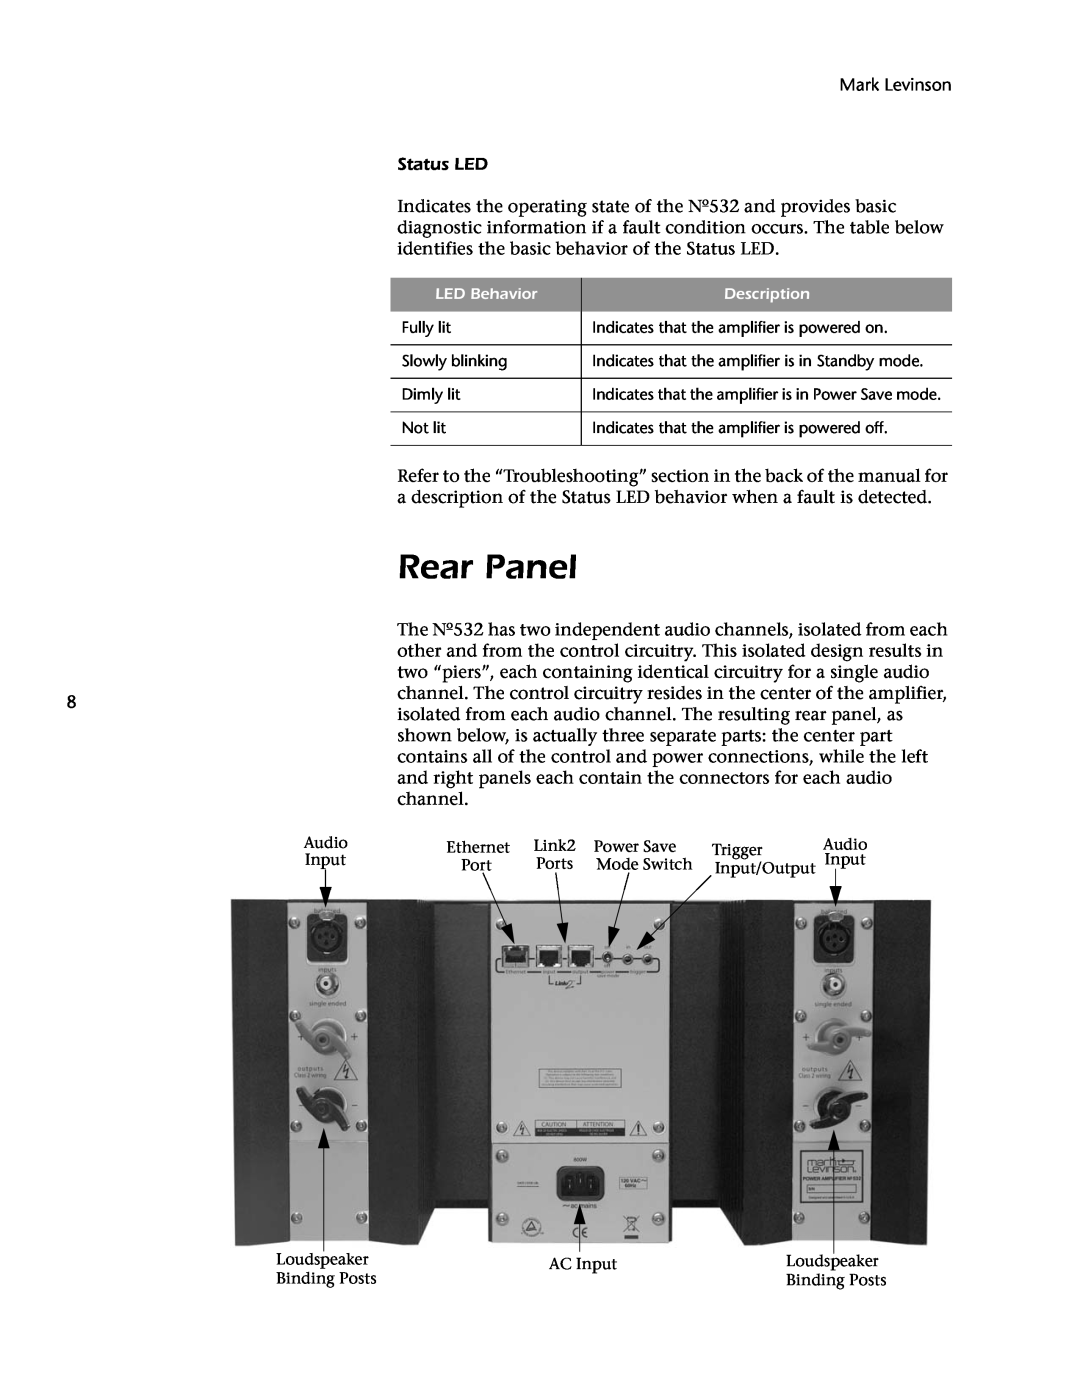 Mark Levinson 532 owner manual Rear Panel, Mark Levinson Status LED 